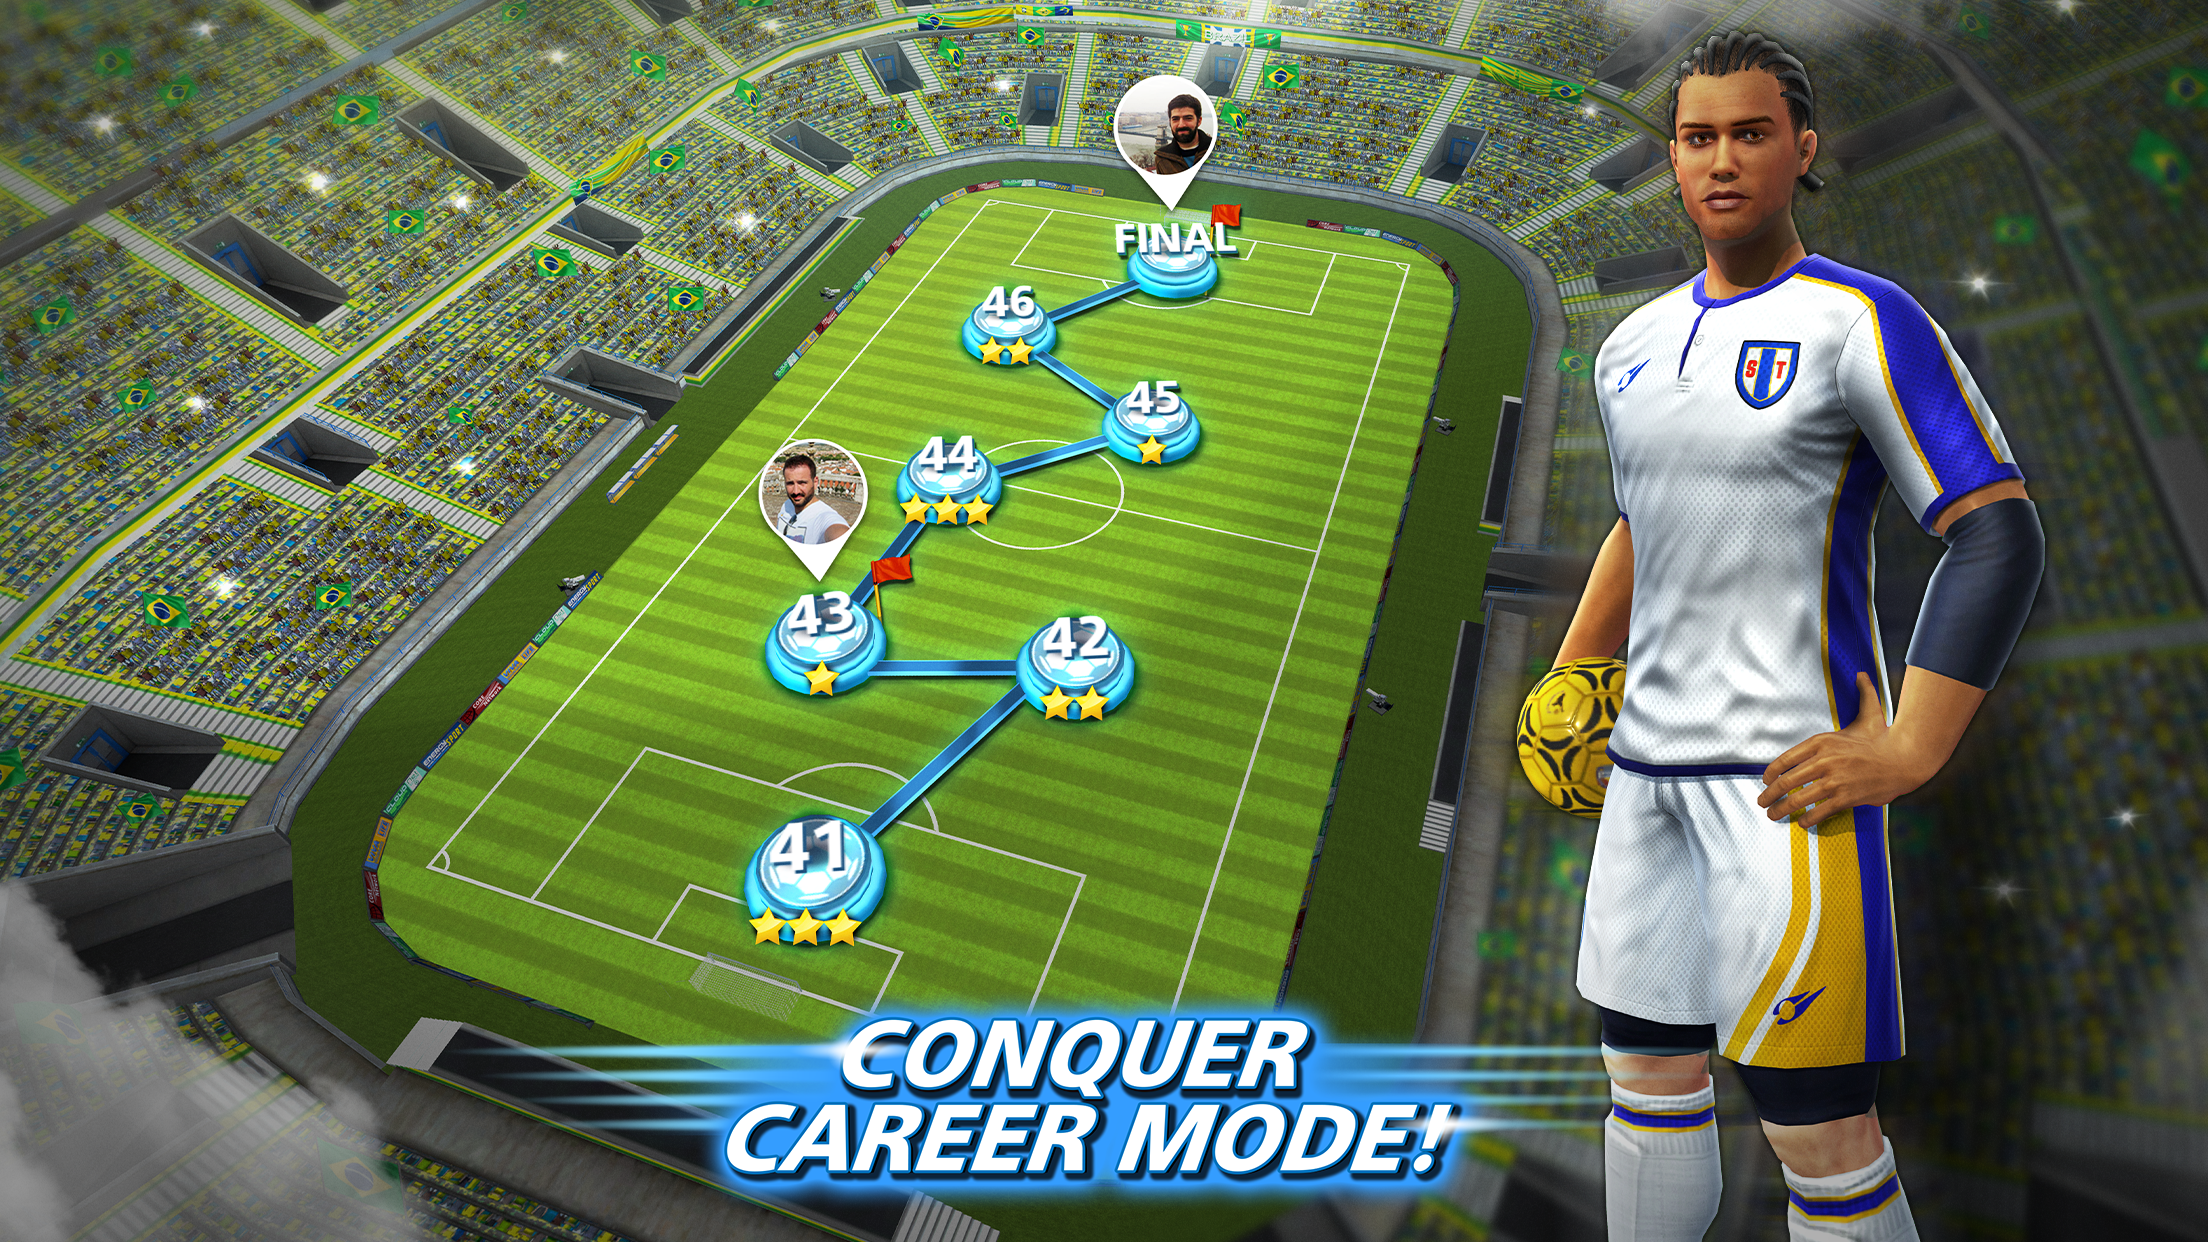 Screenshot of Football Strike: Online Soccer